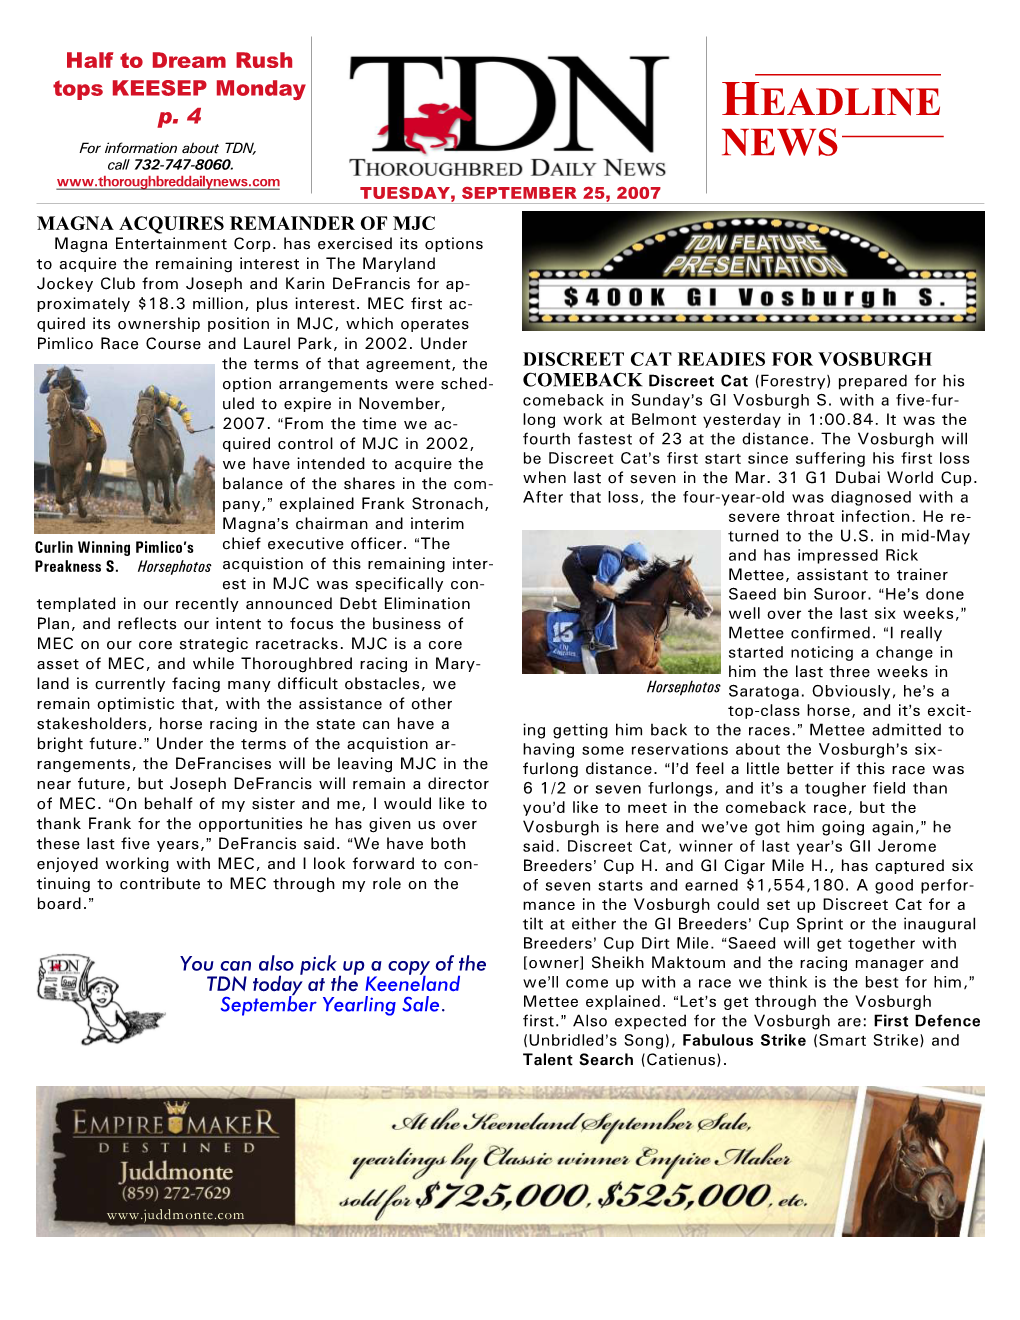 HEADLINE NEWS • 9/25/07 • PAGE 2 of 6